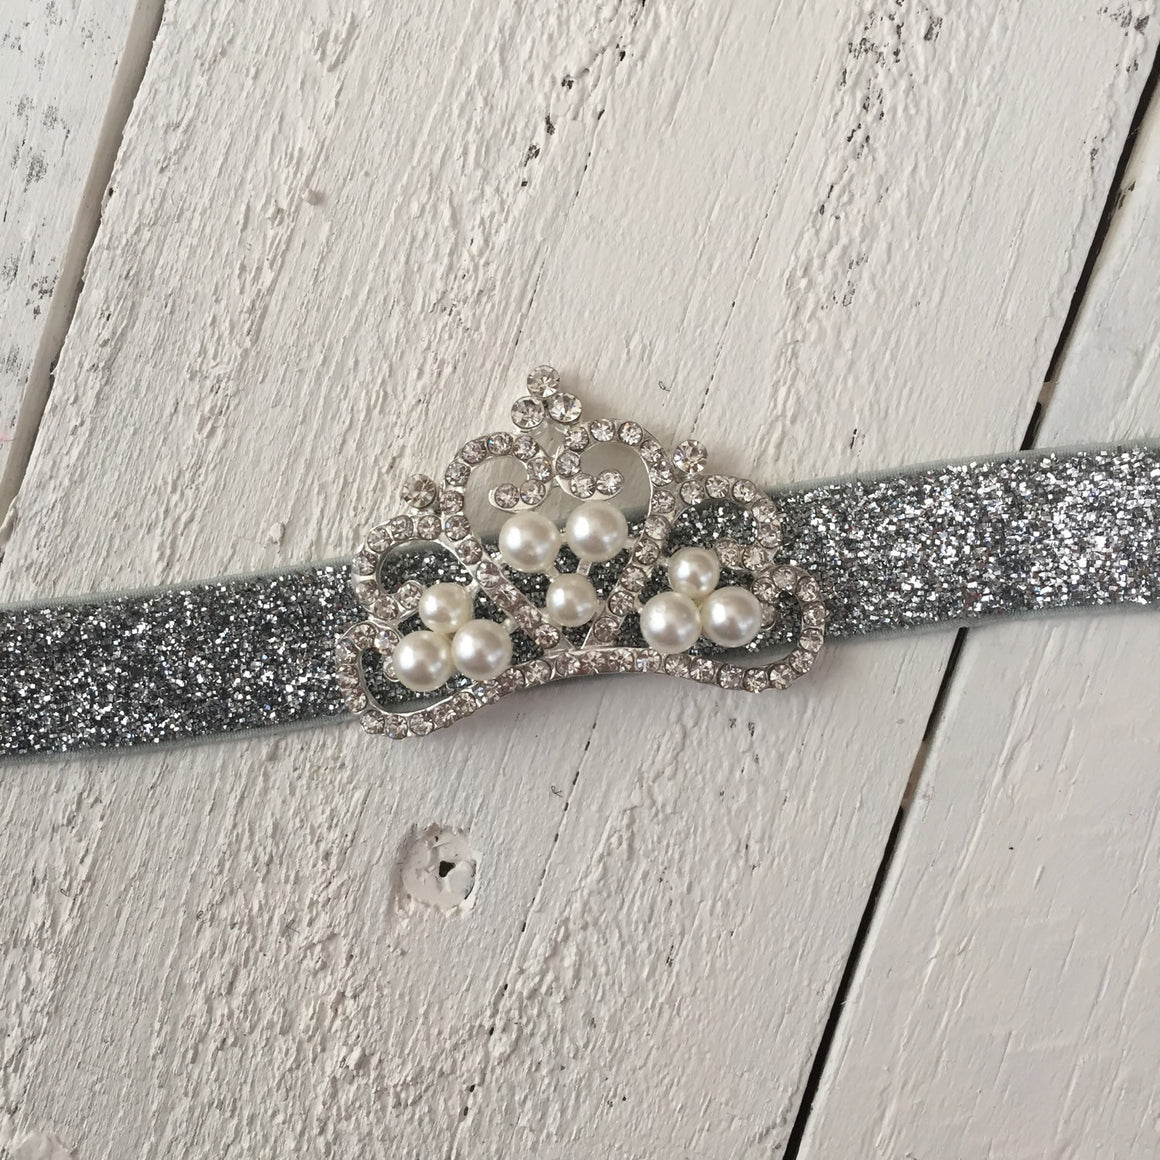 Rhinestone & Pearl Tiara headband - silver glitter and gray ruffle bottom bloomers - HoneyLoveBoutique